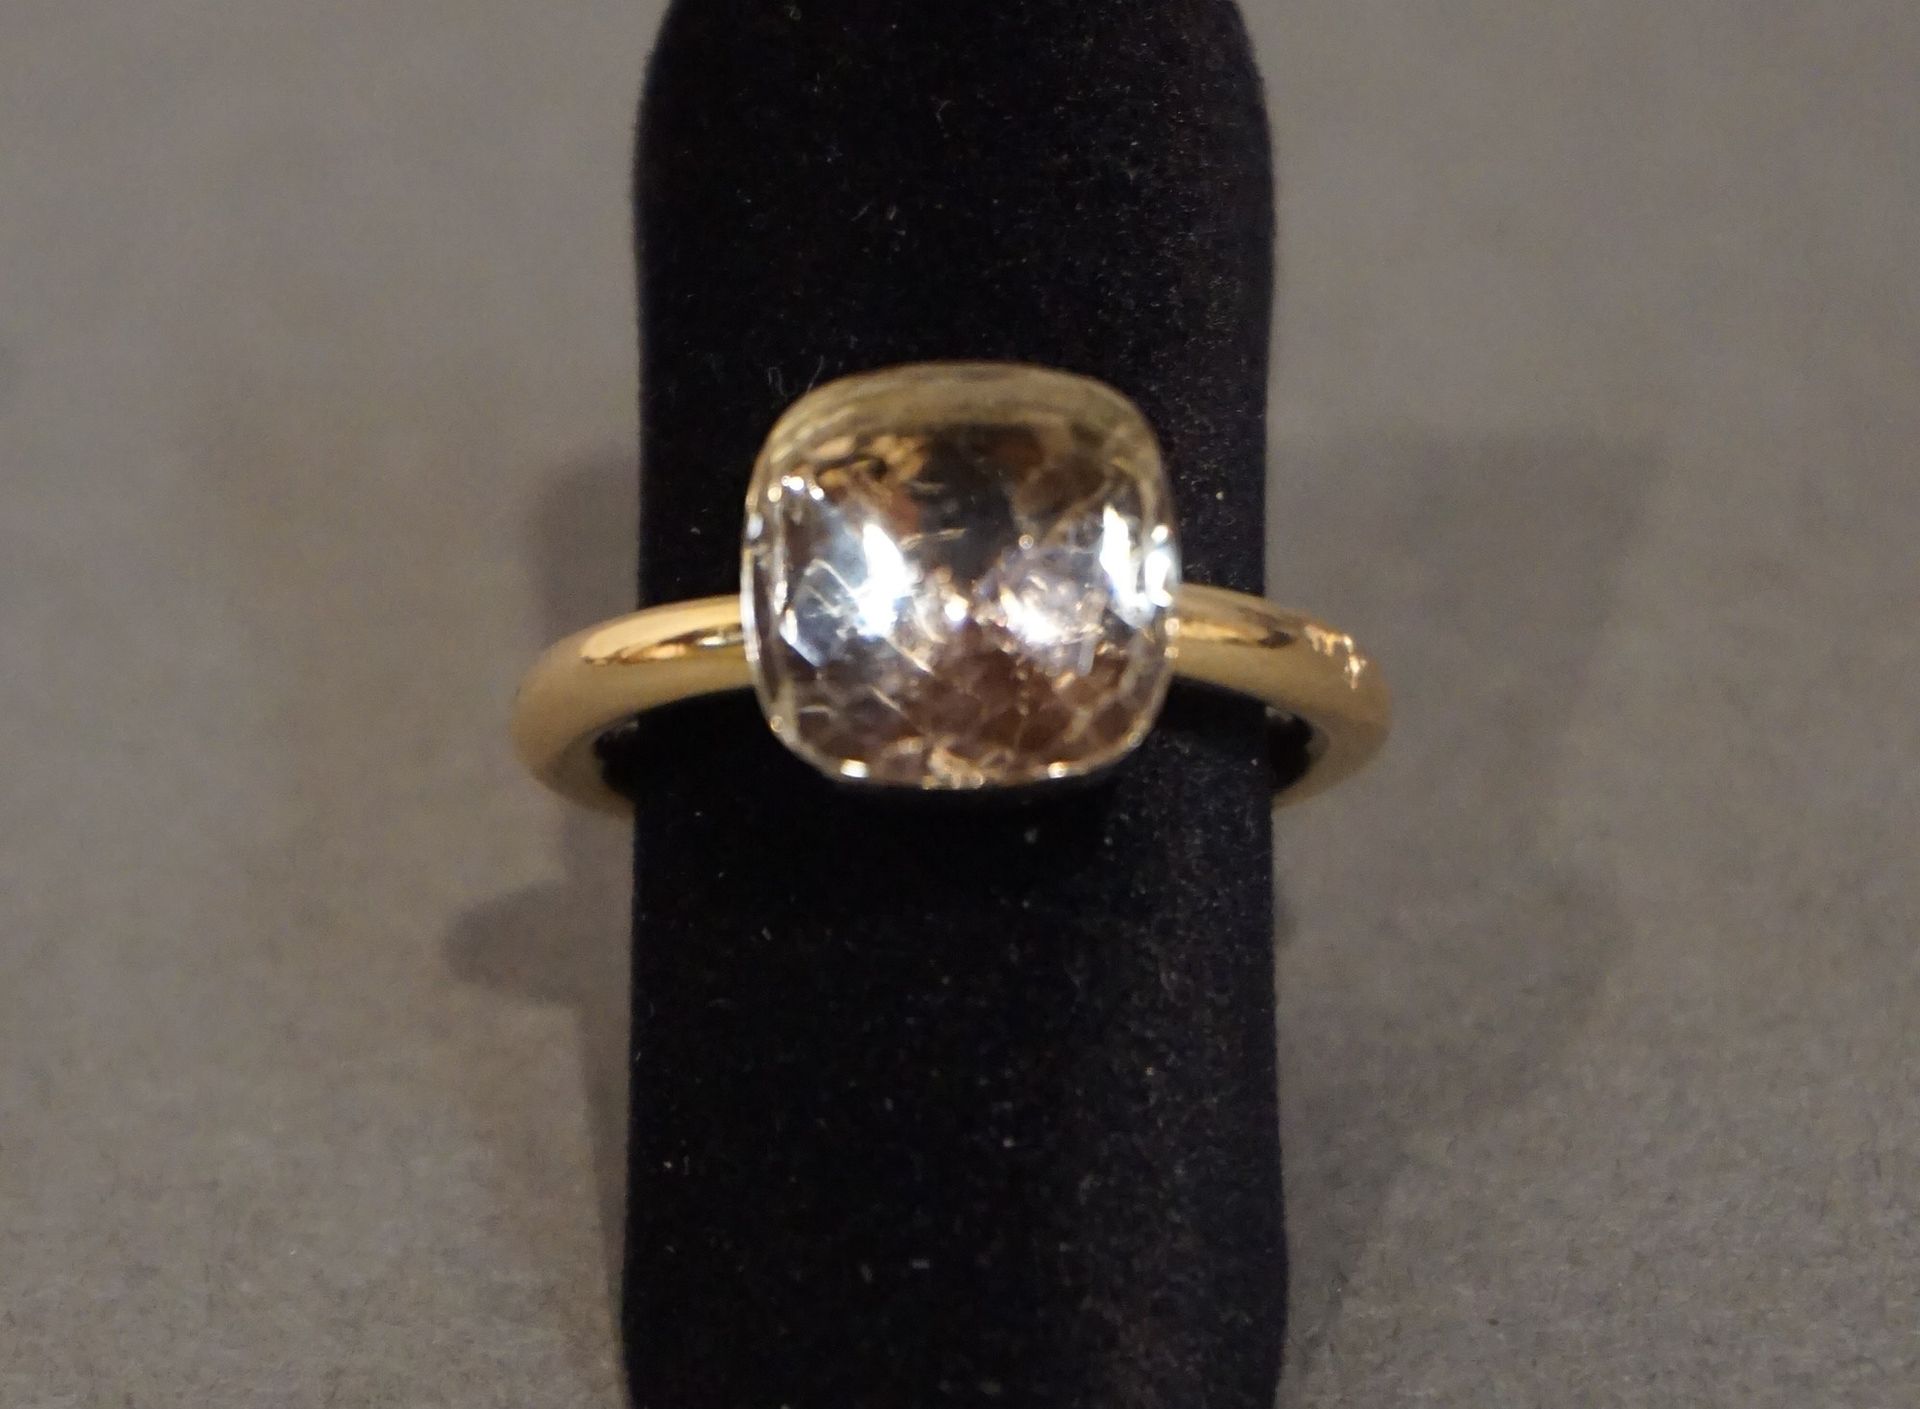 POMELATTO POMELATTO: 镶嵌有精美烟熏石（黄宝石）的金戒指，重8克。手指大小 53